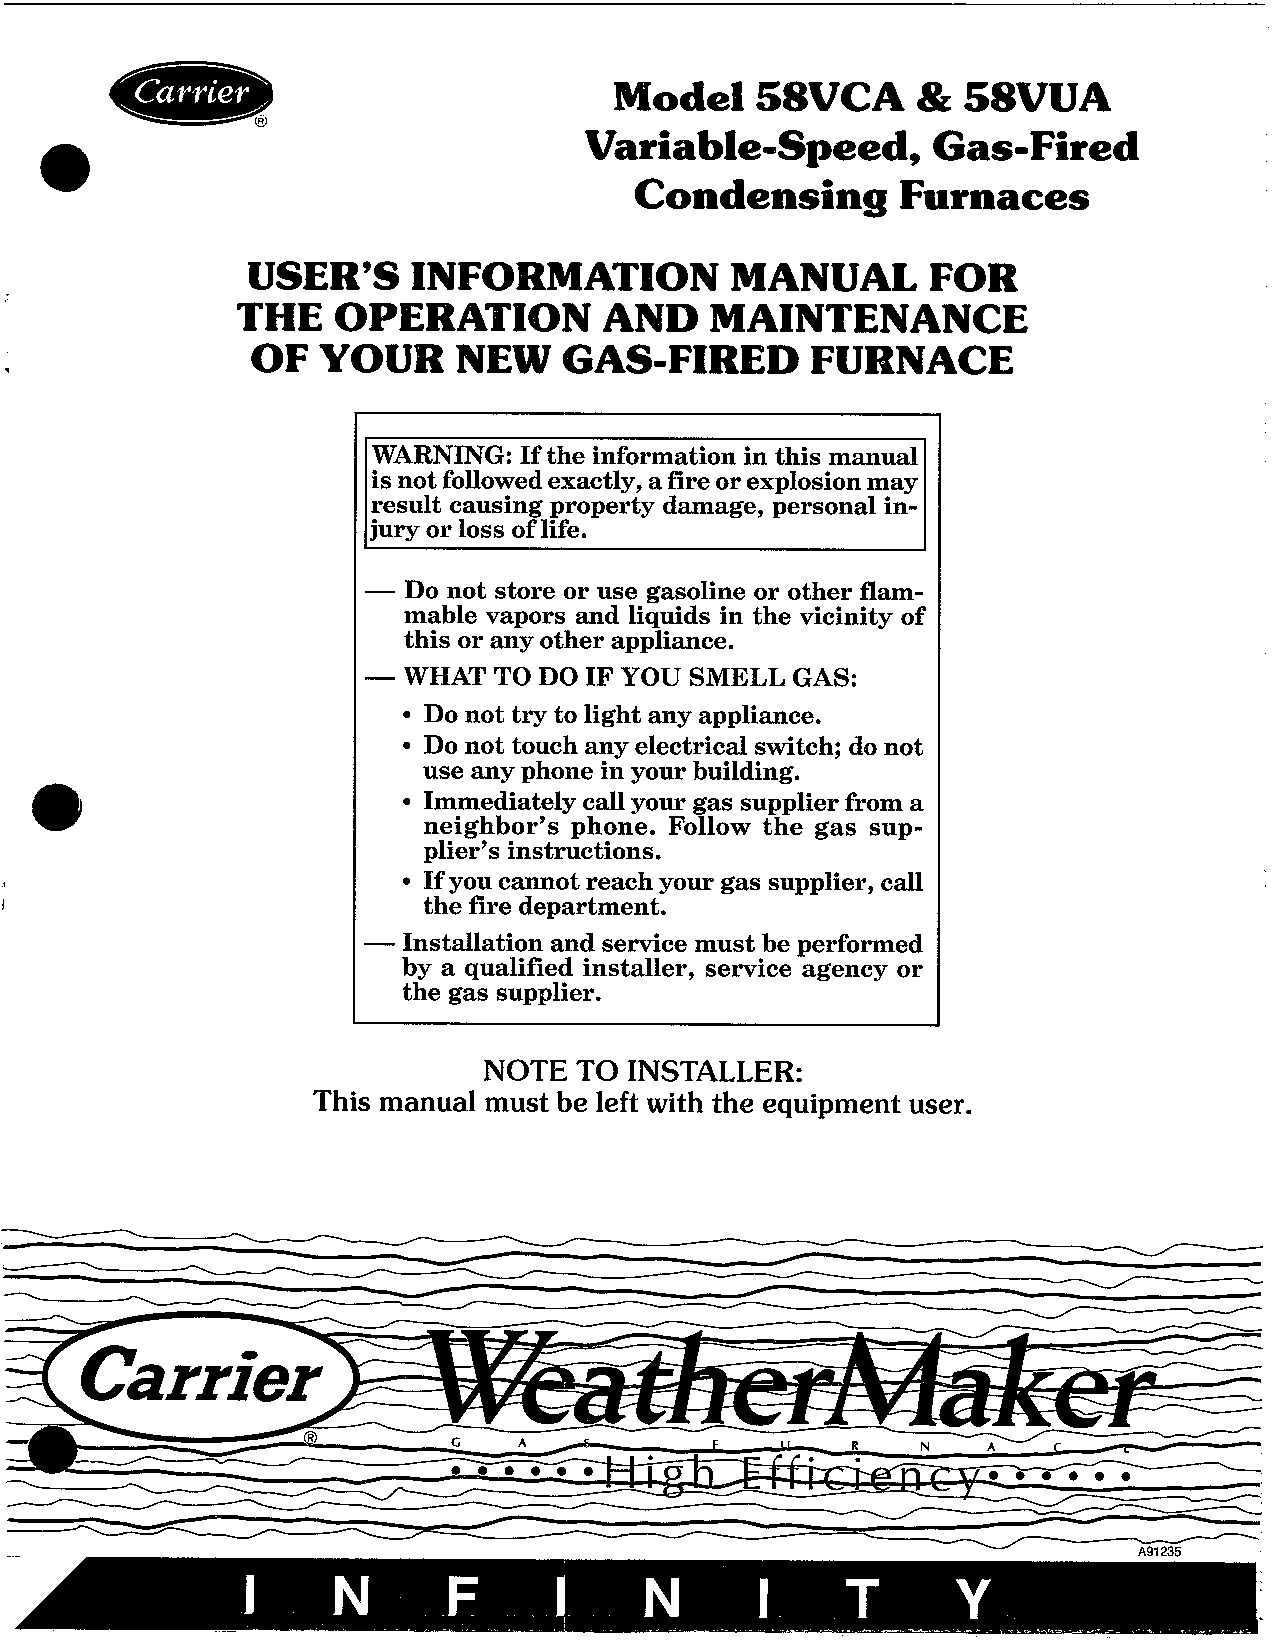 Carrier WEATHER MARKER 58VUA, WEATHER MARKER 58VCA User Manual